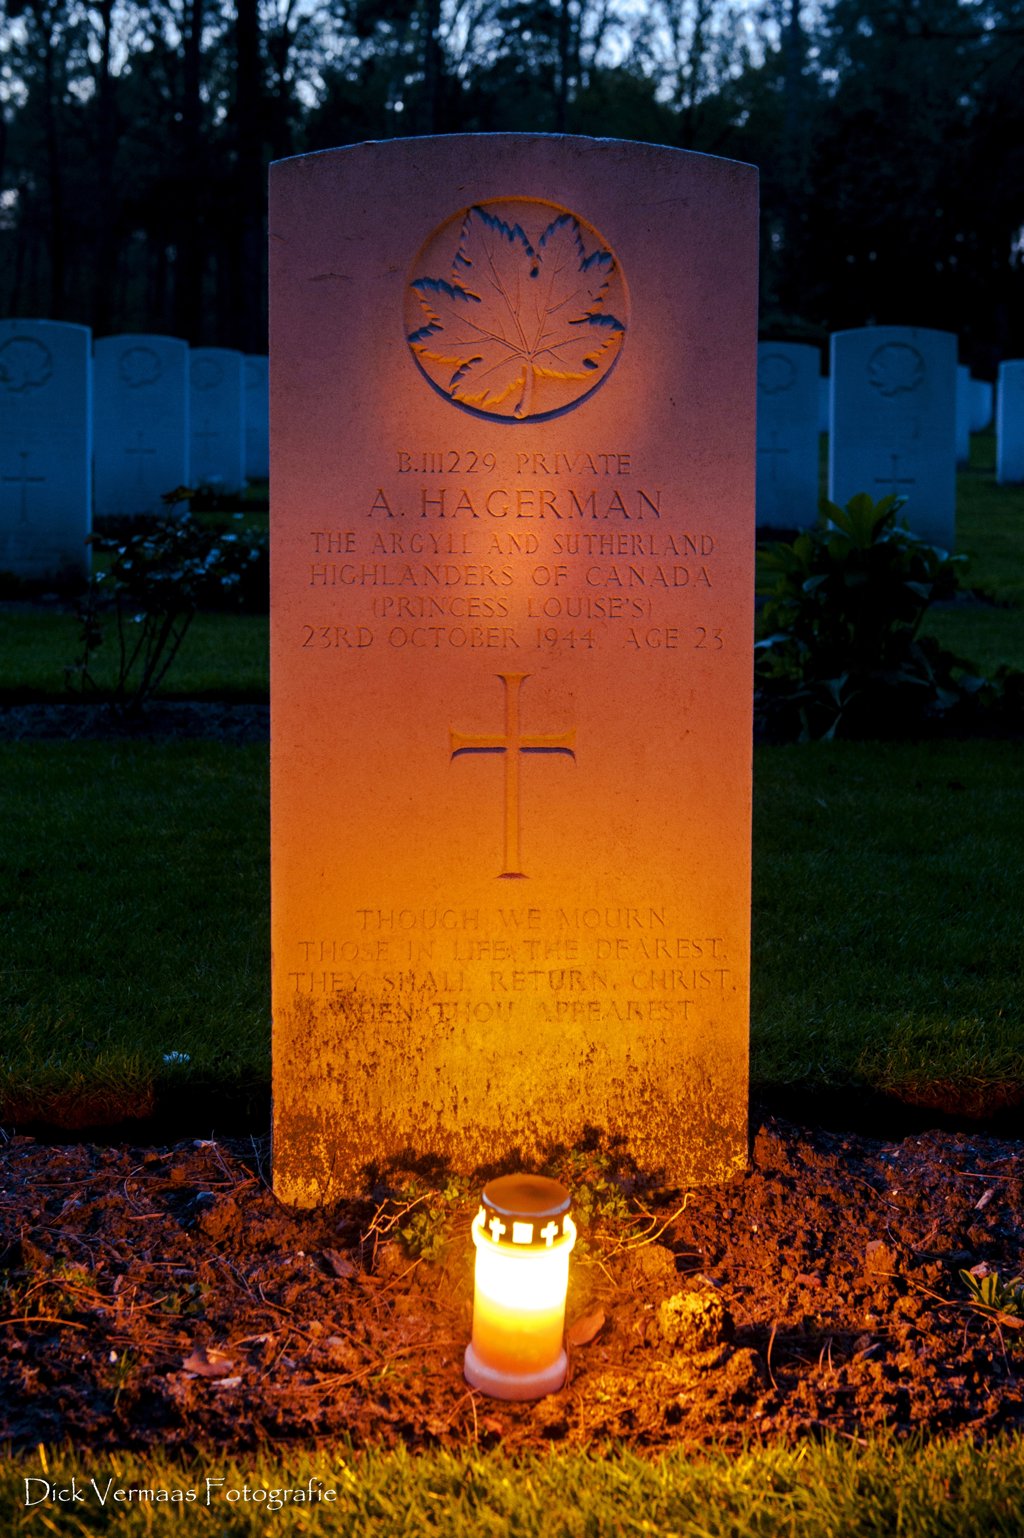 Lichtjes op oorlogsgraven